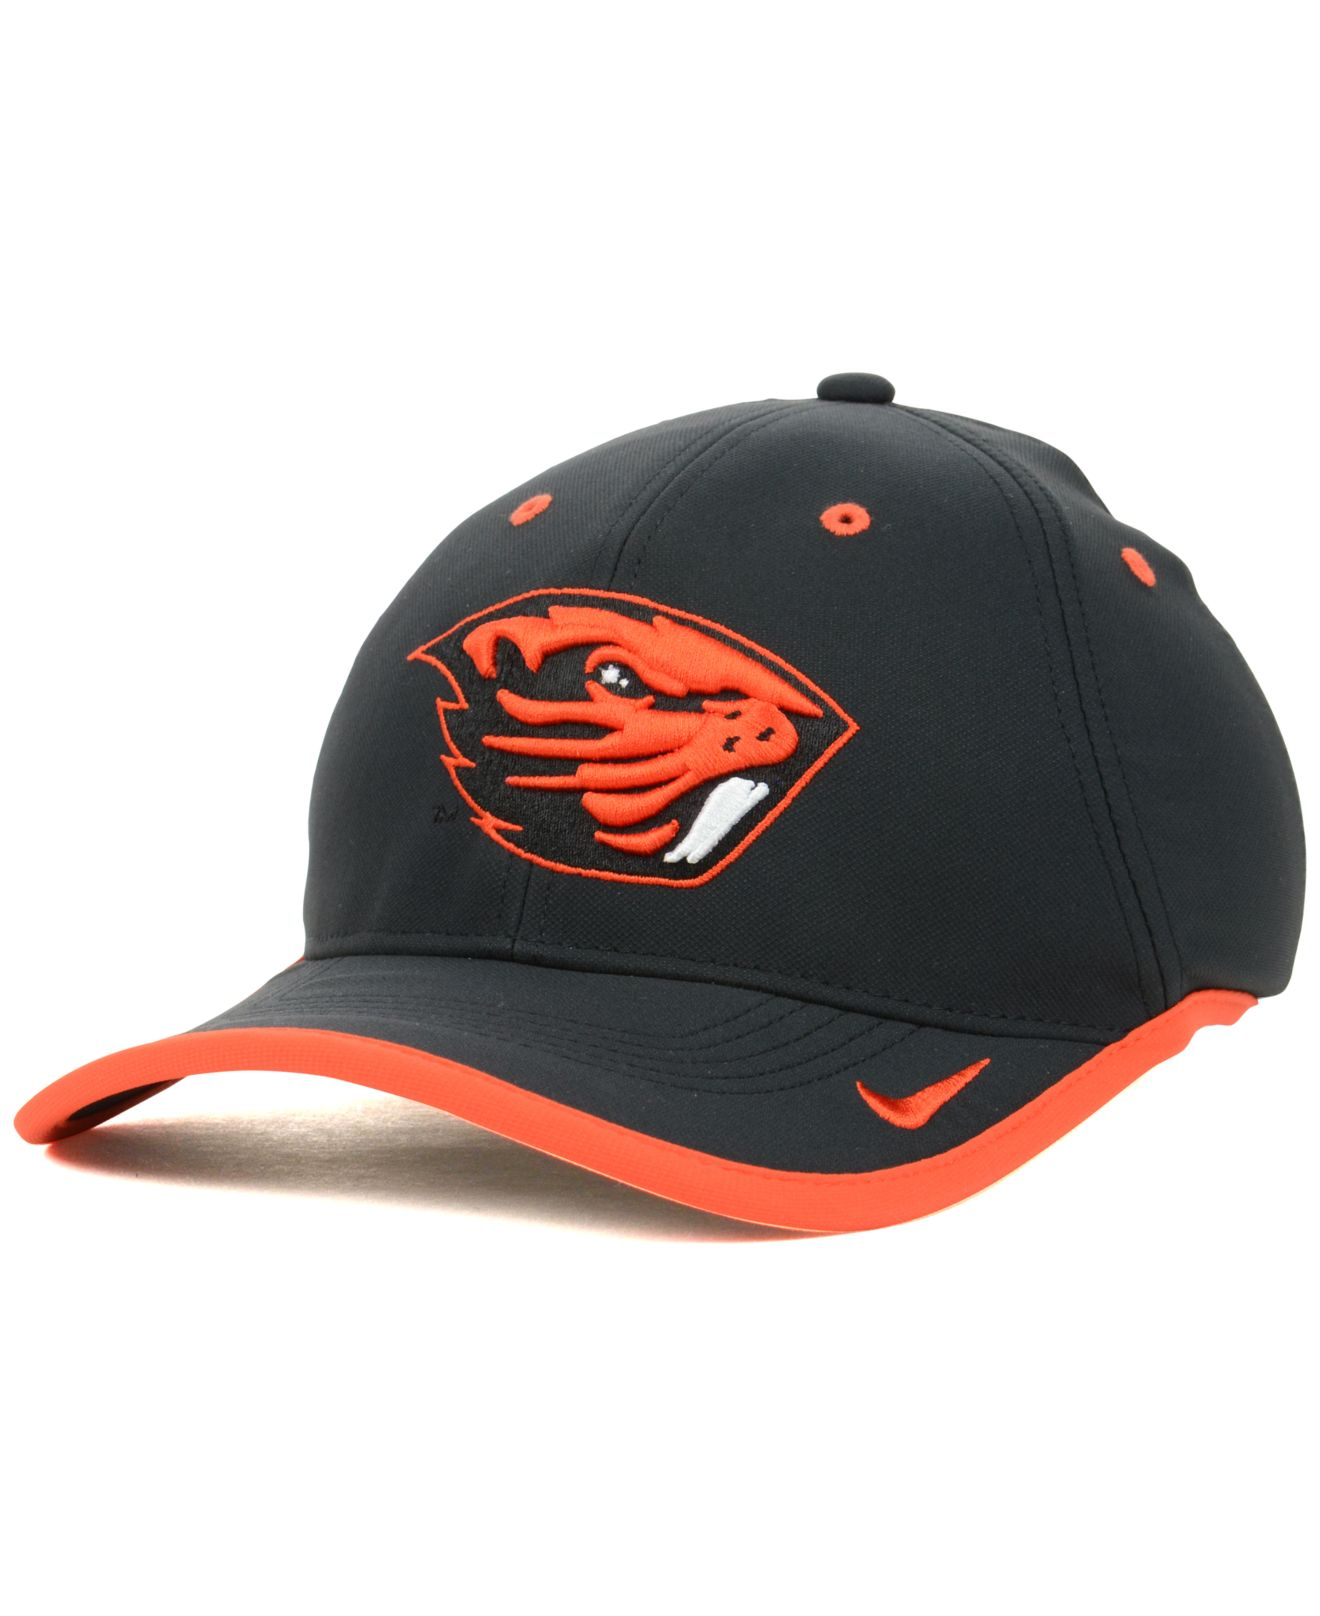 nike oregon state beavers fitted baseball hat